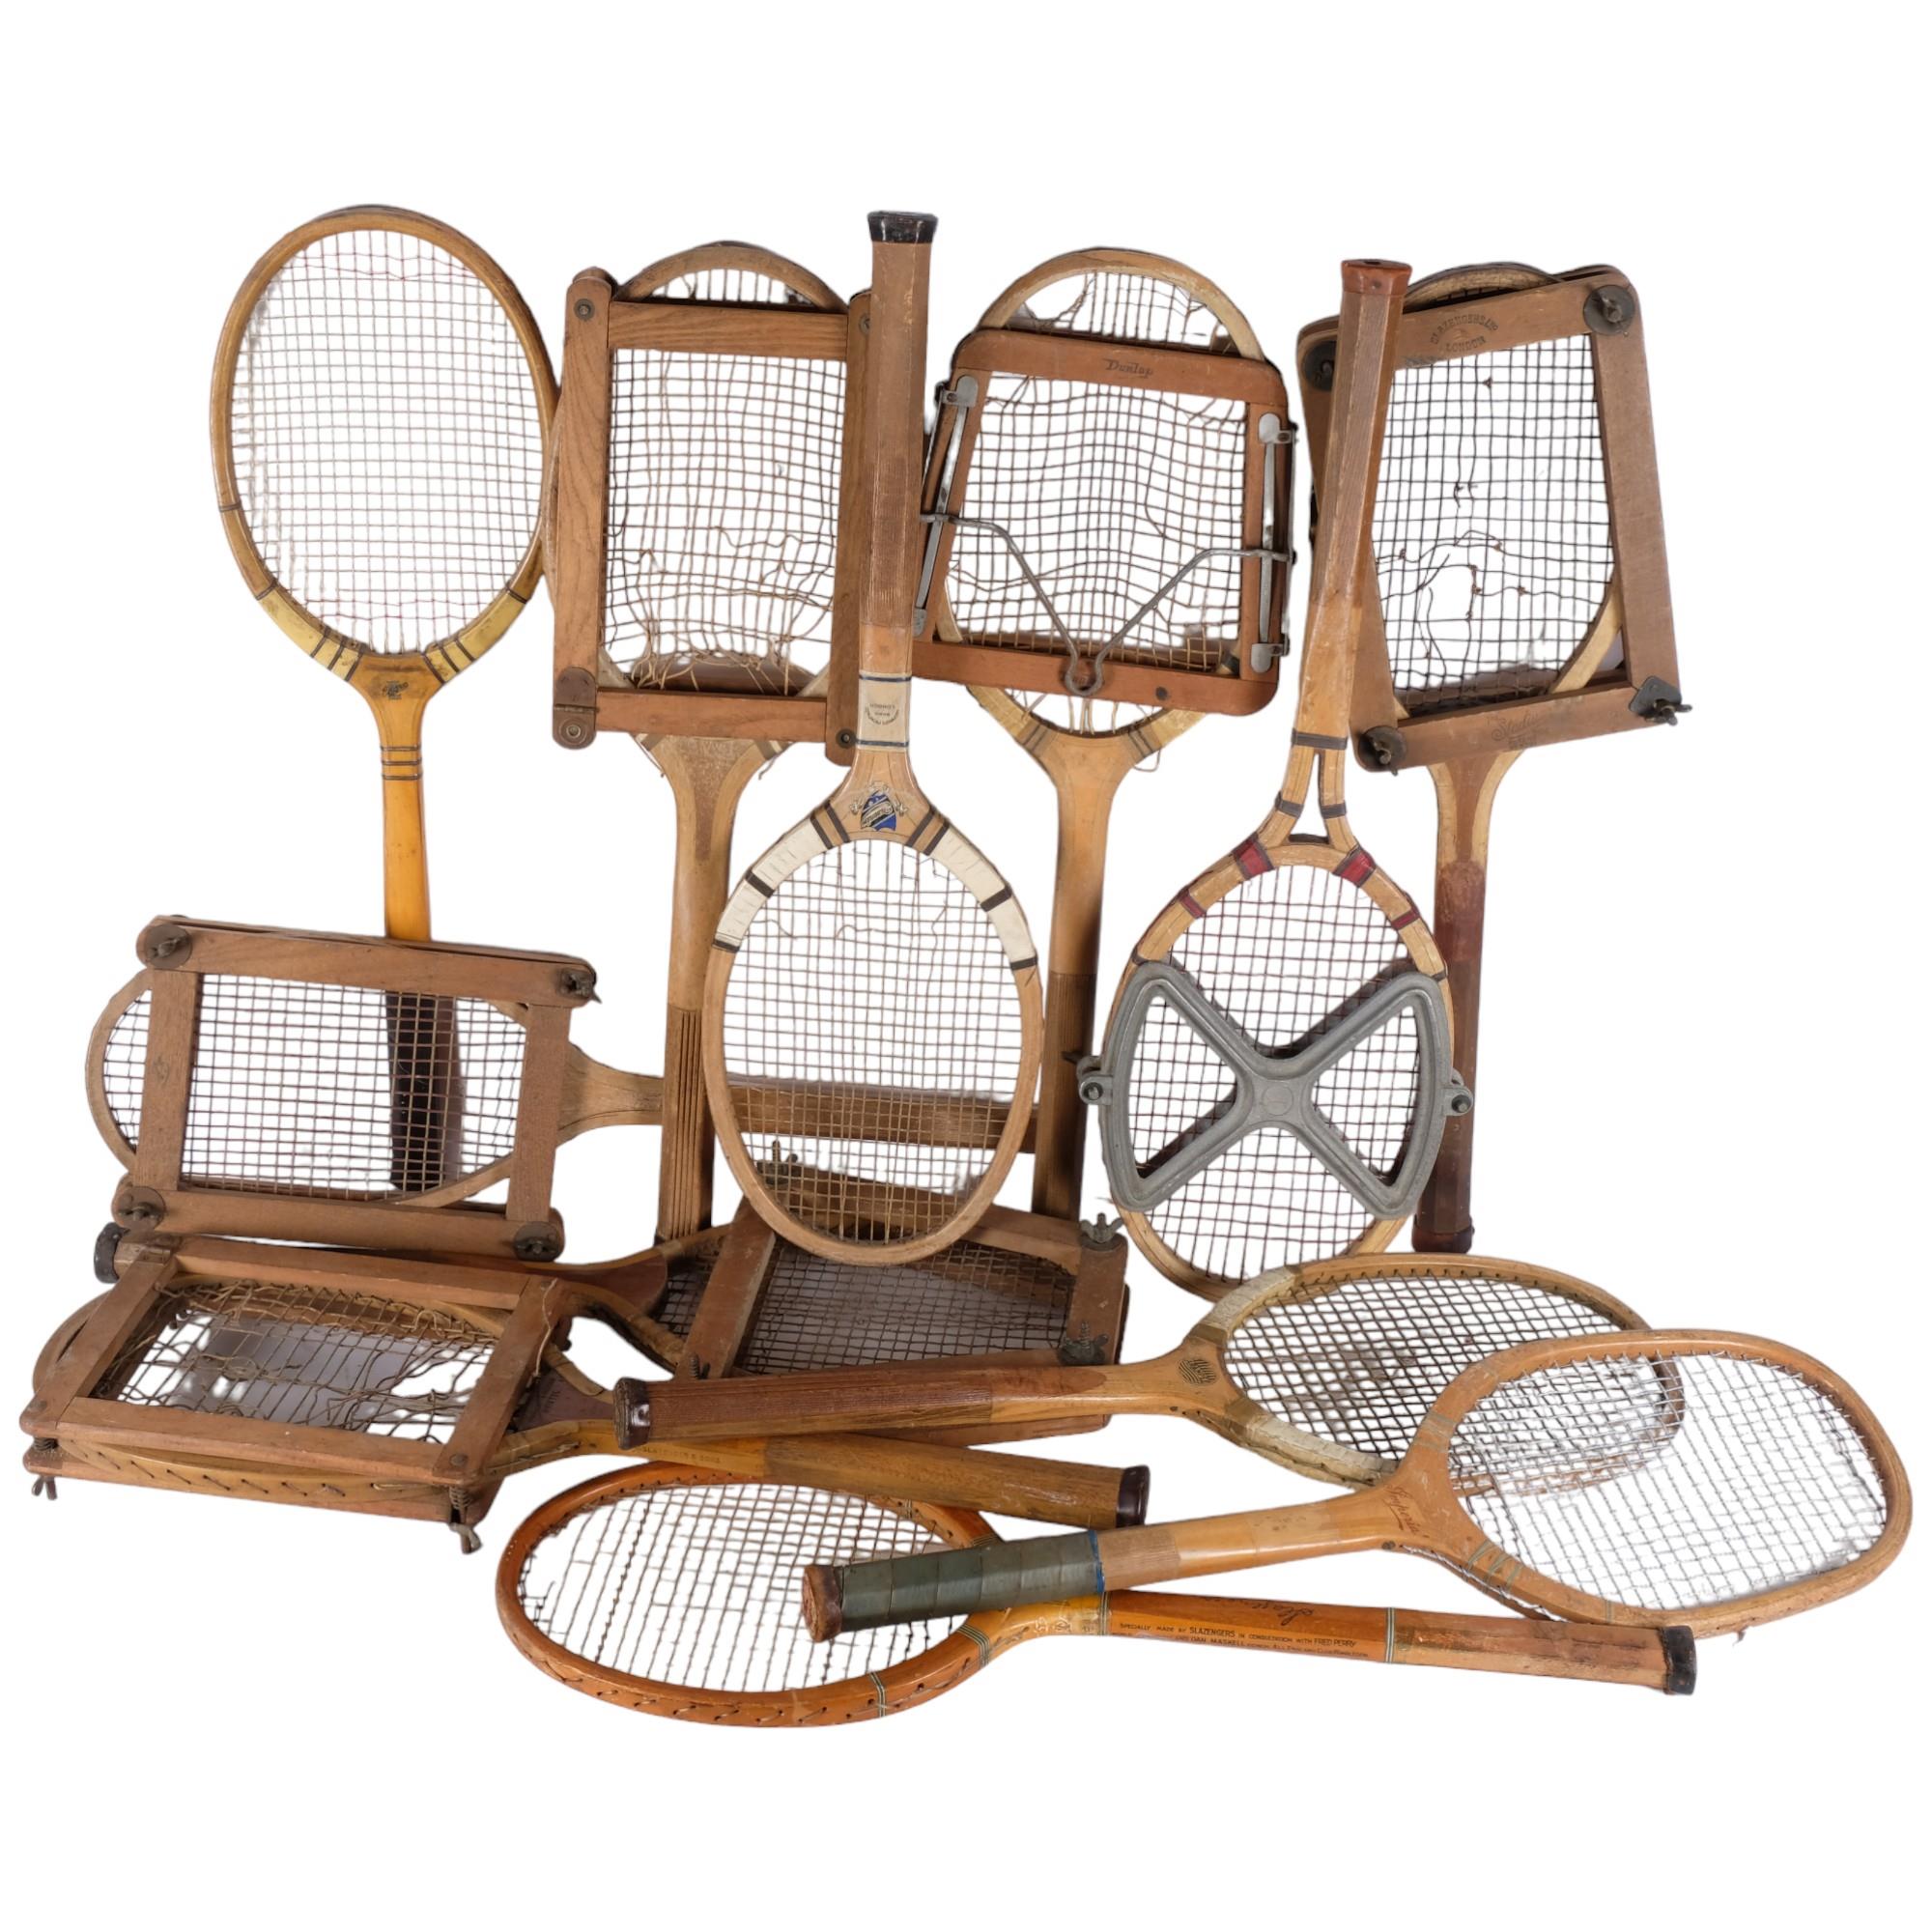 Various Vintage wooden tennis rackets and presses, including Dunlop, Slazenger etc. (12).